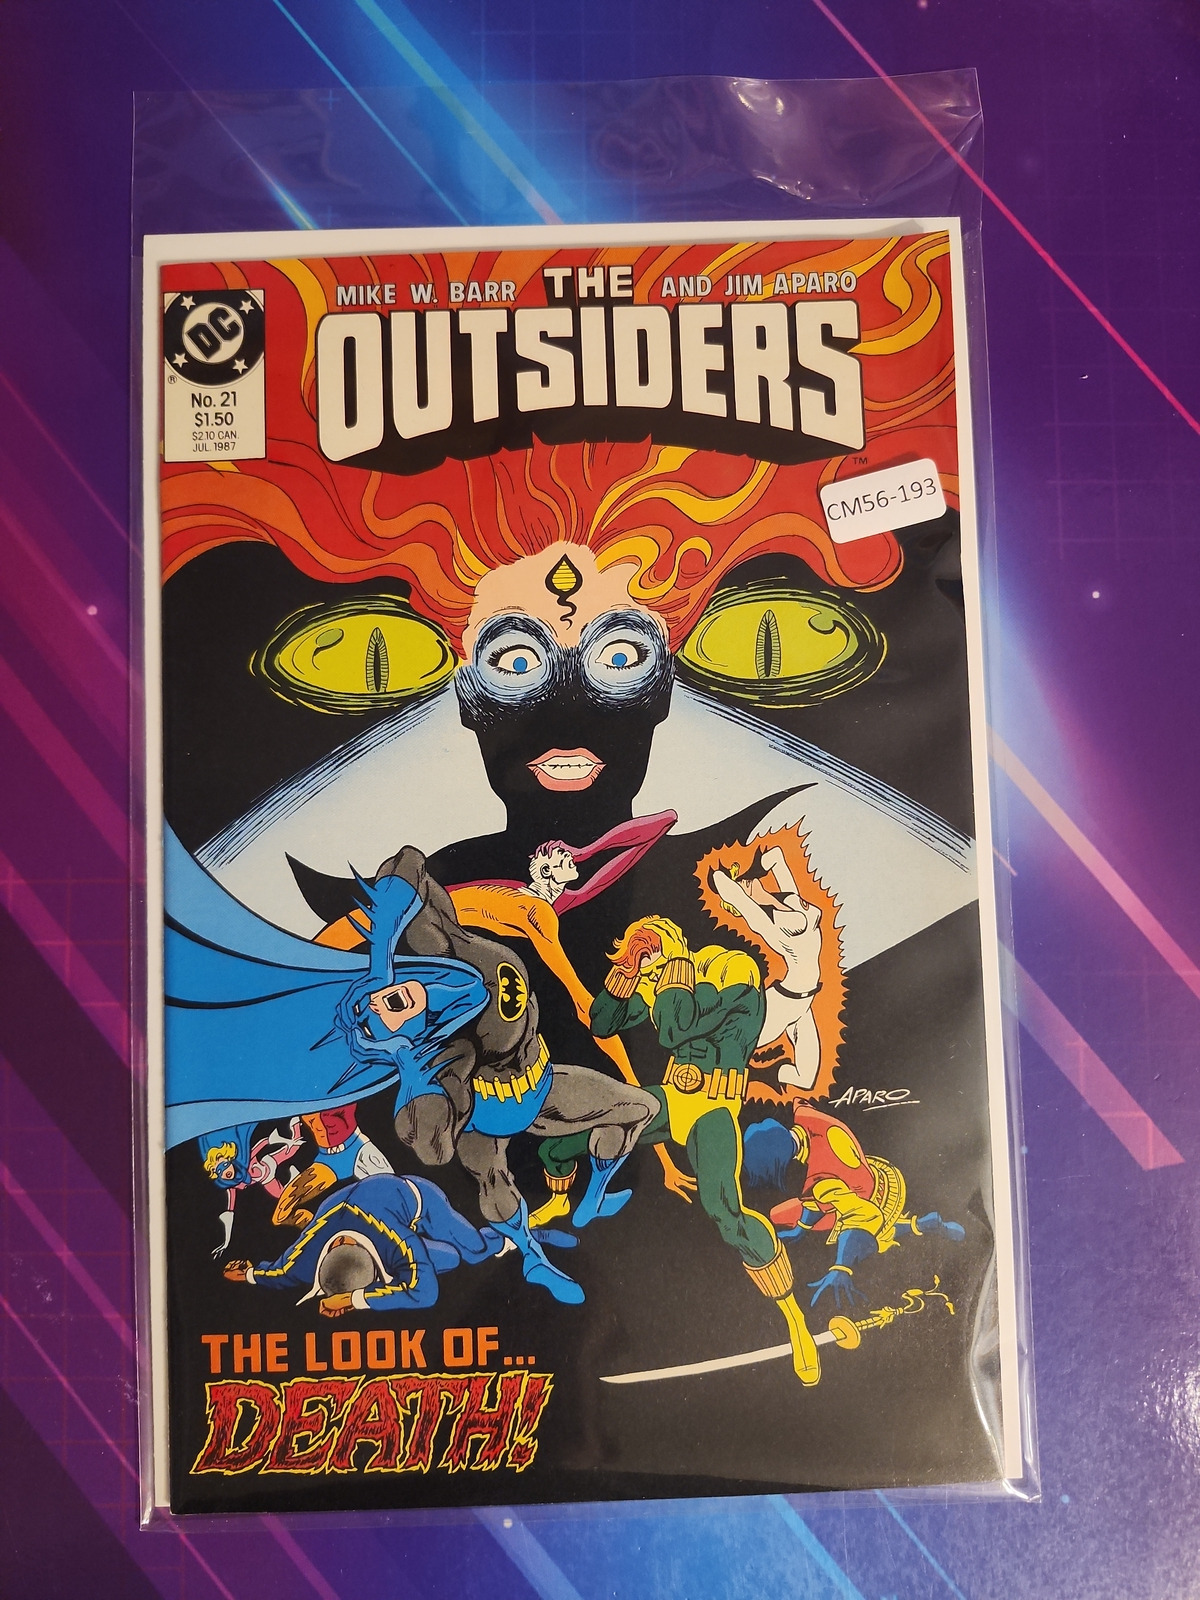 OUTSIDERS #21 VOL. 1 9.2 DC COMIC BOOK CM56-193